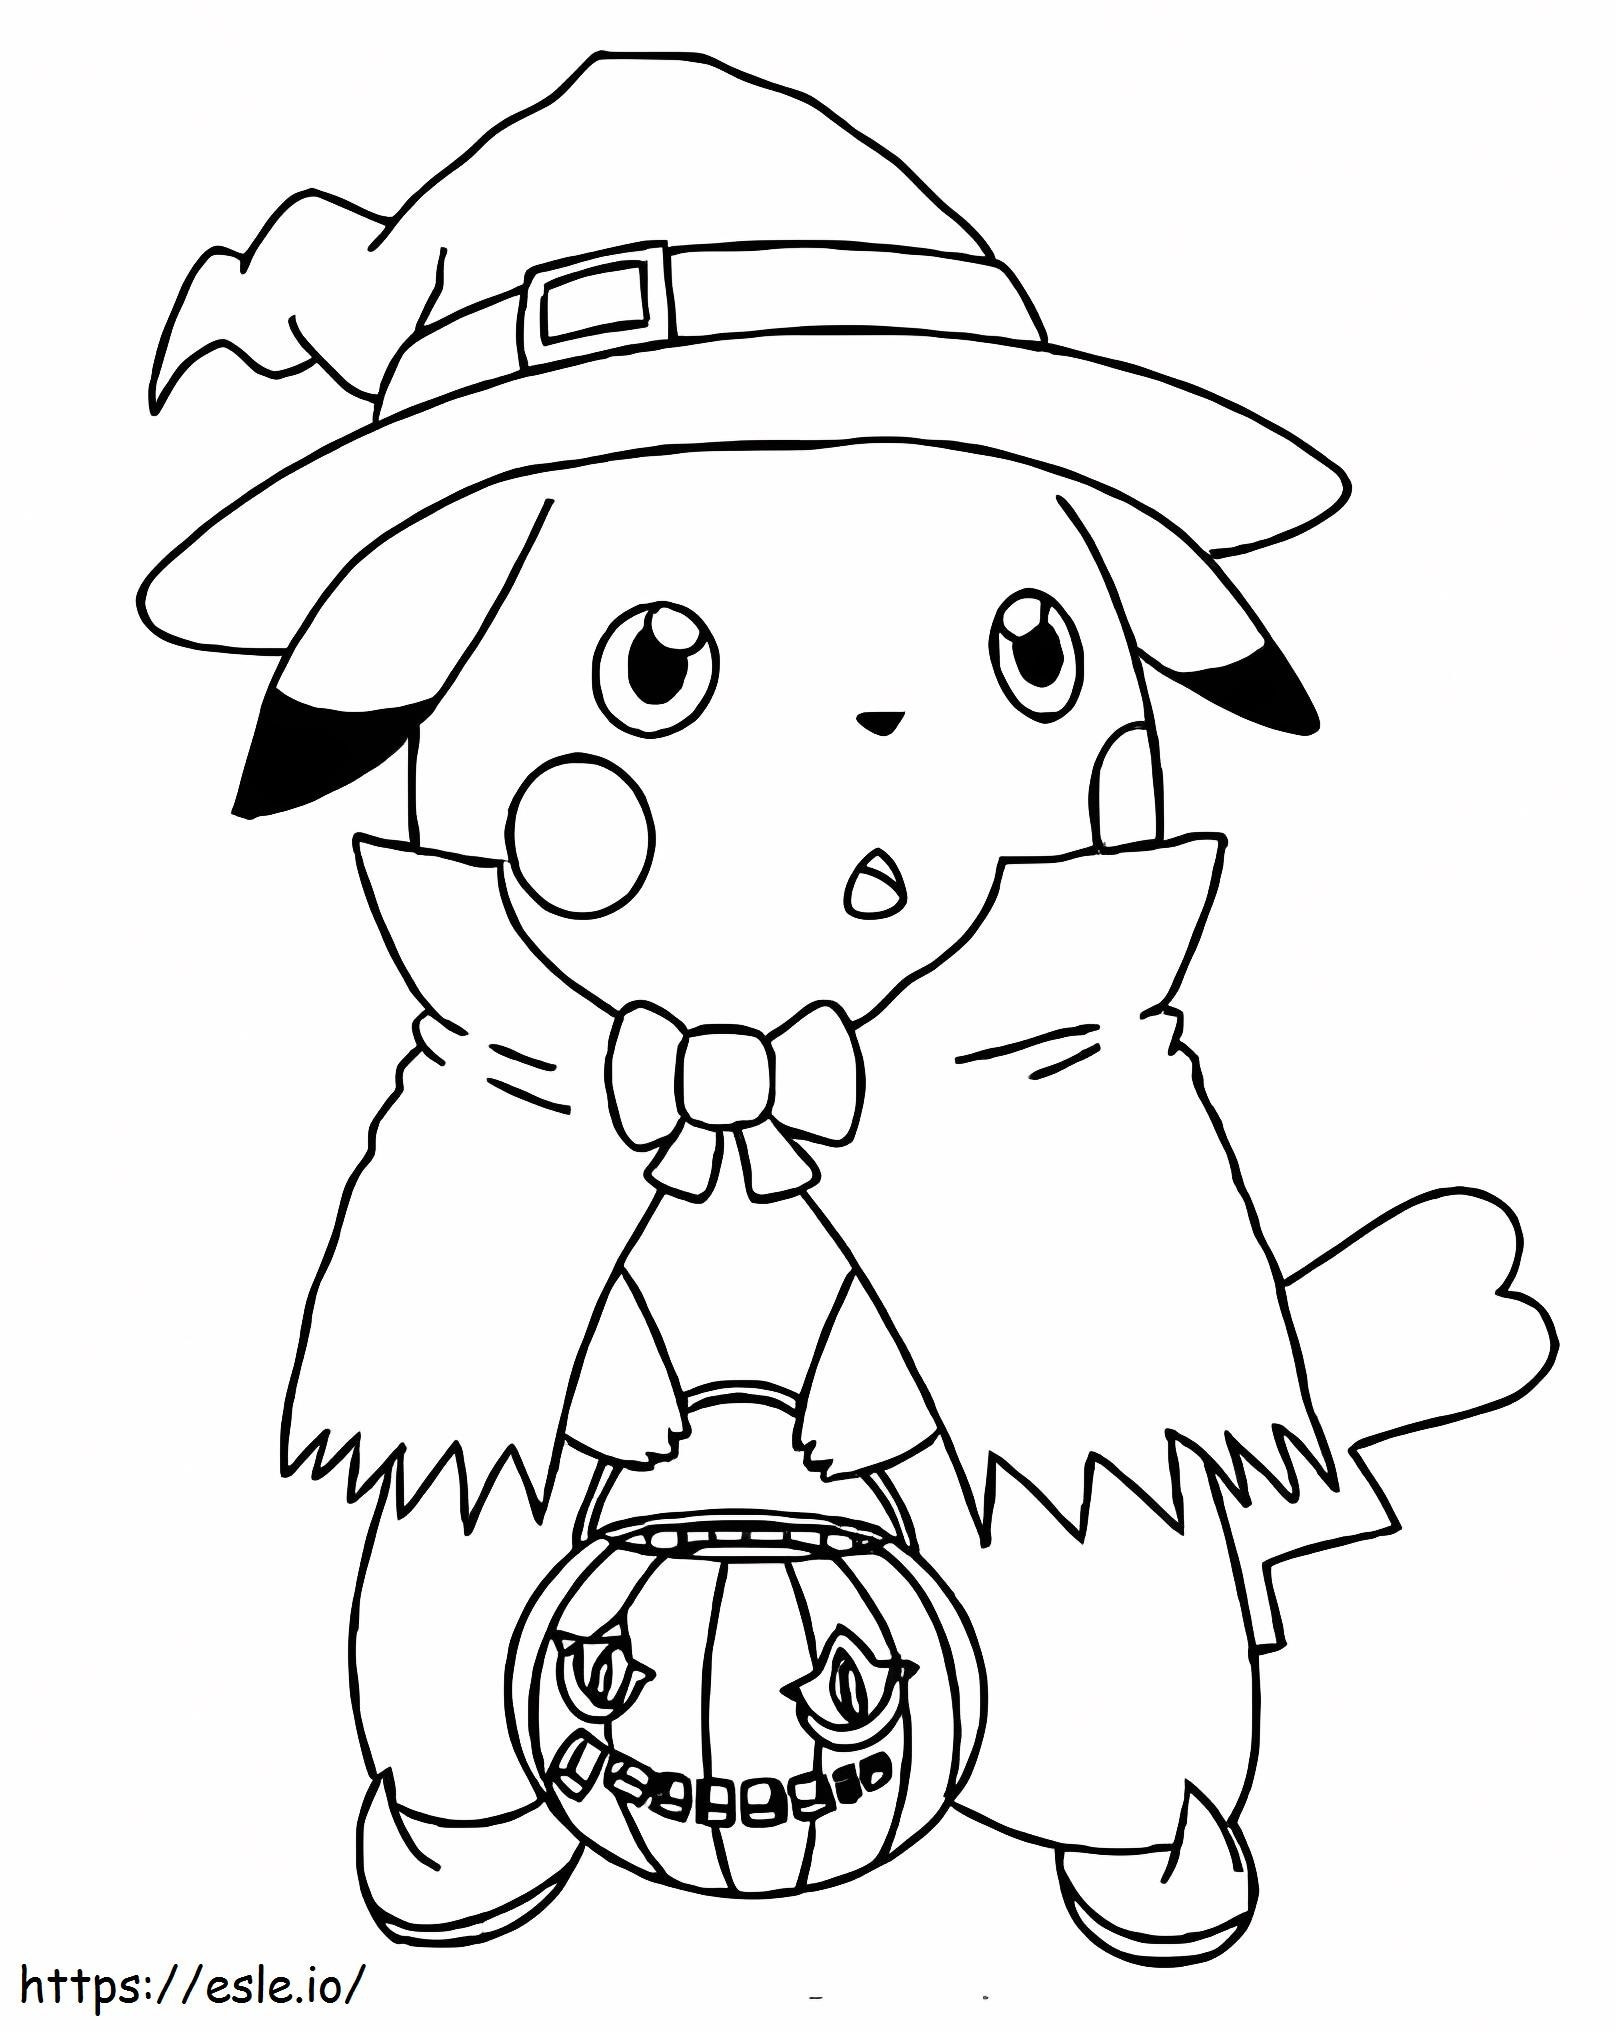 Süßes Halloween-Pikachu ausmalbilder